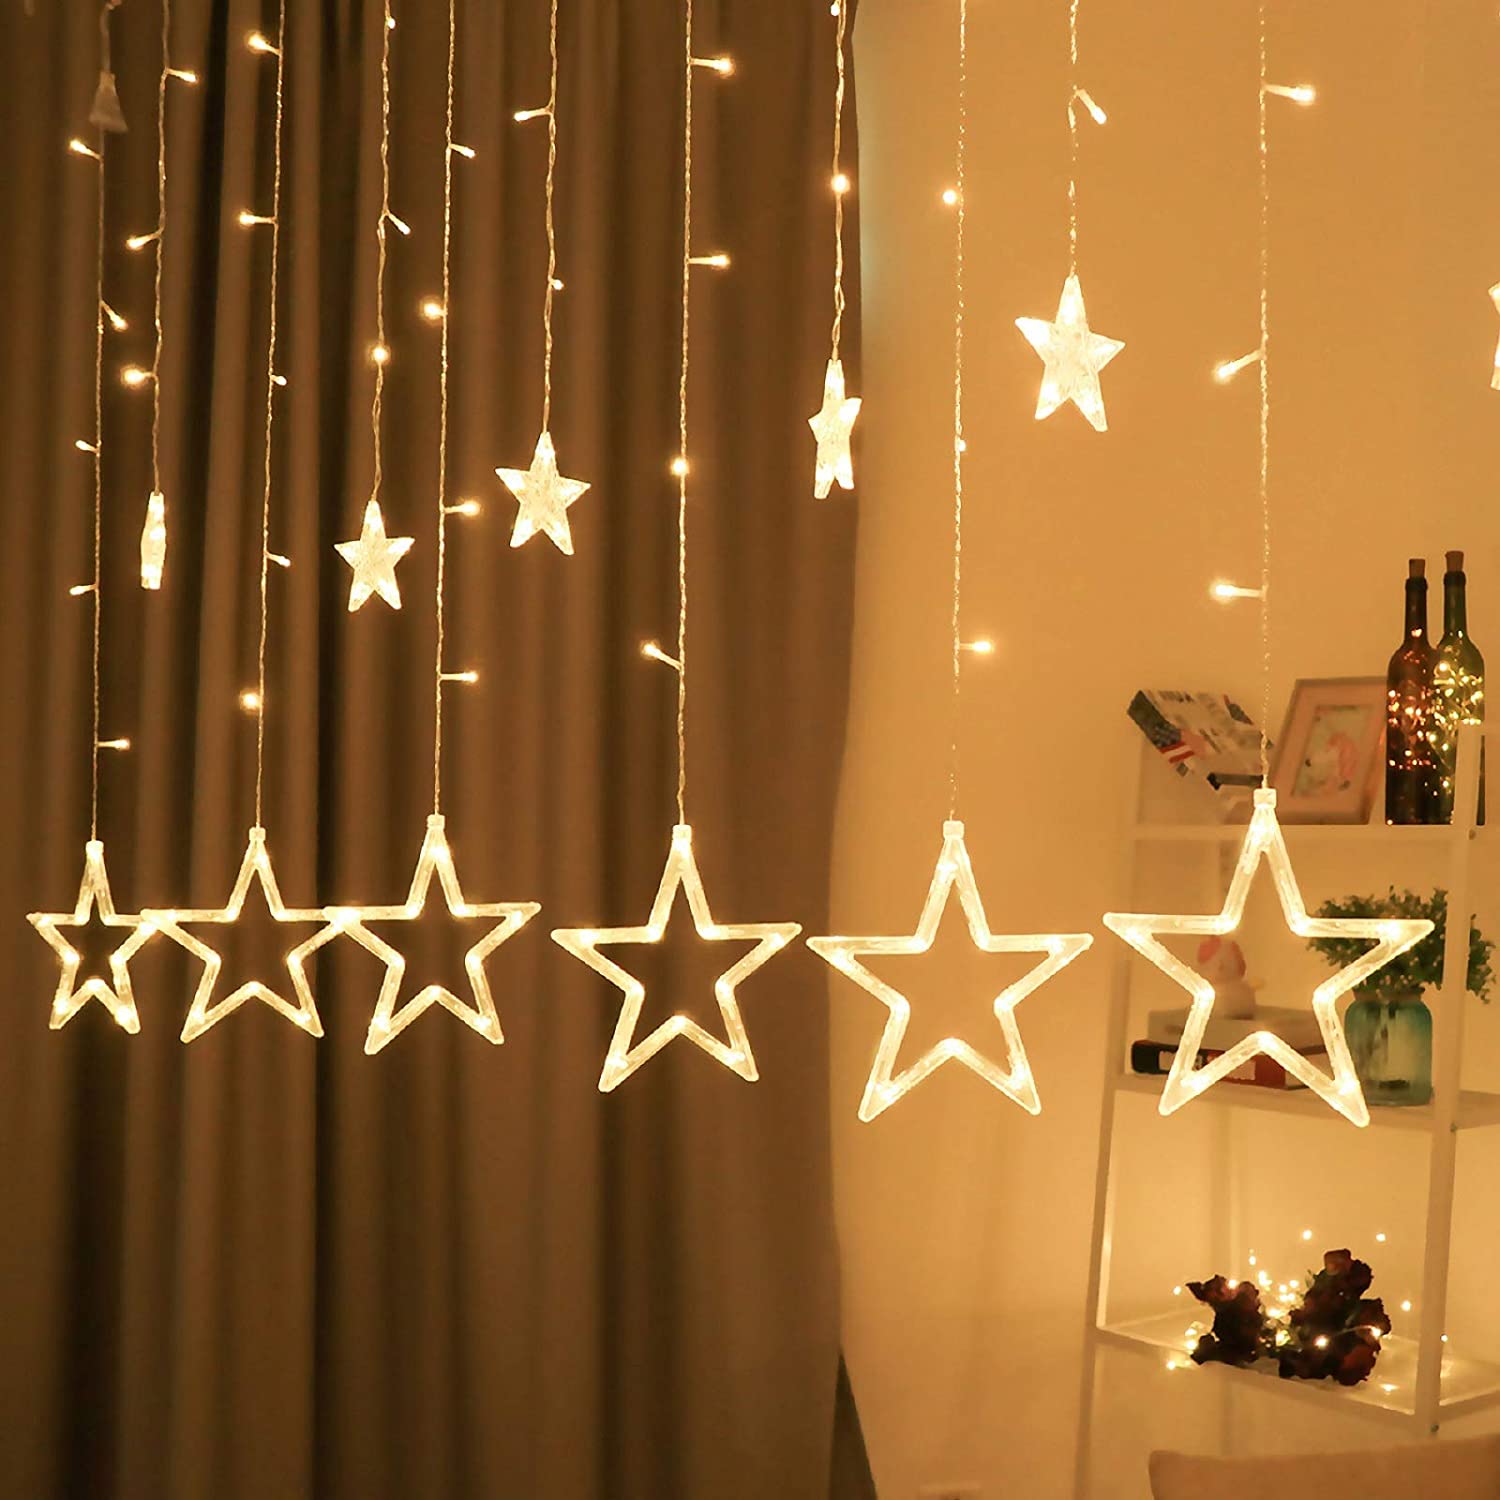 Star curtain lights